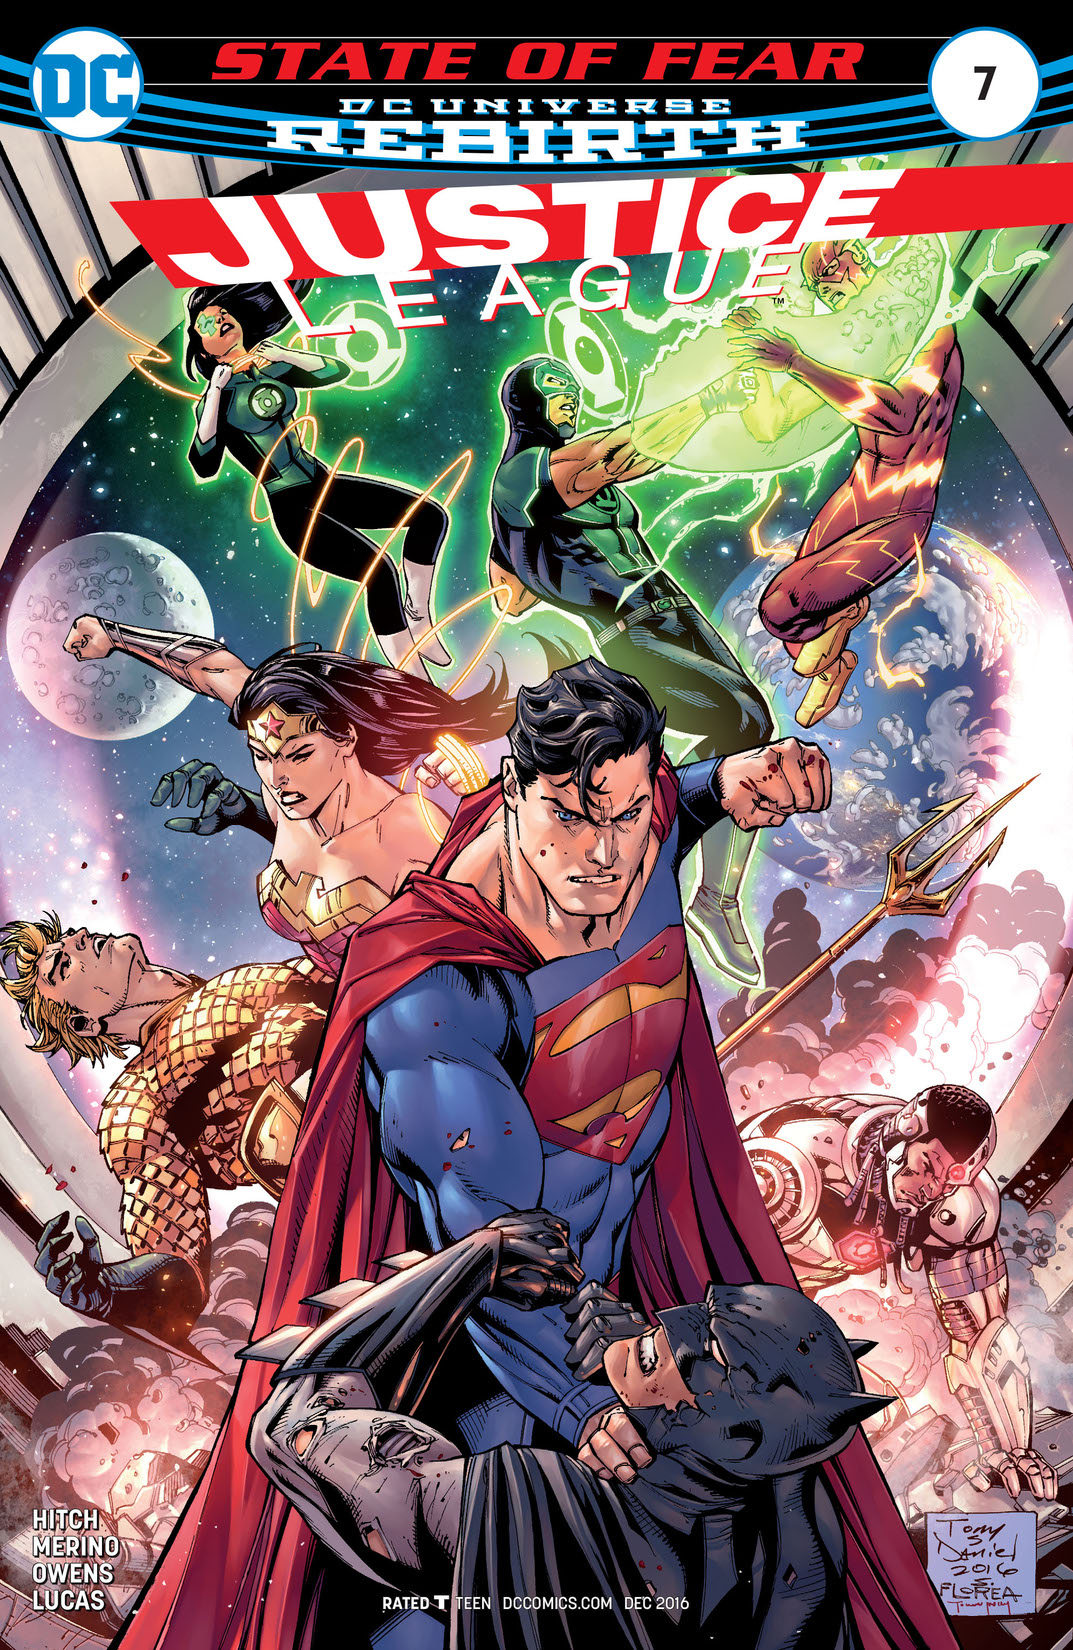 Justice League (2016-) #7 preview images